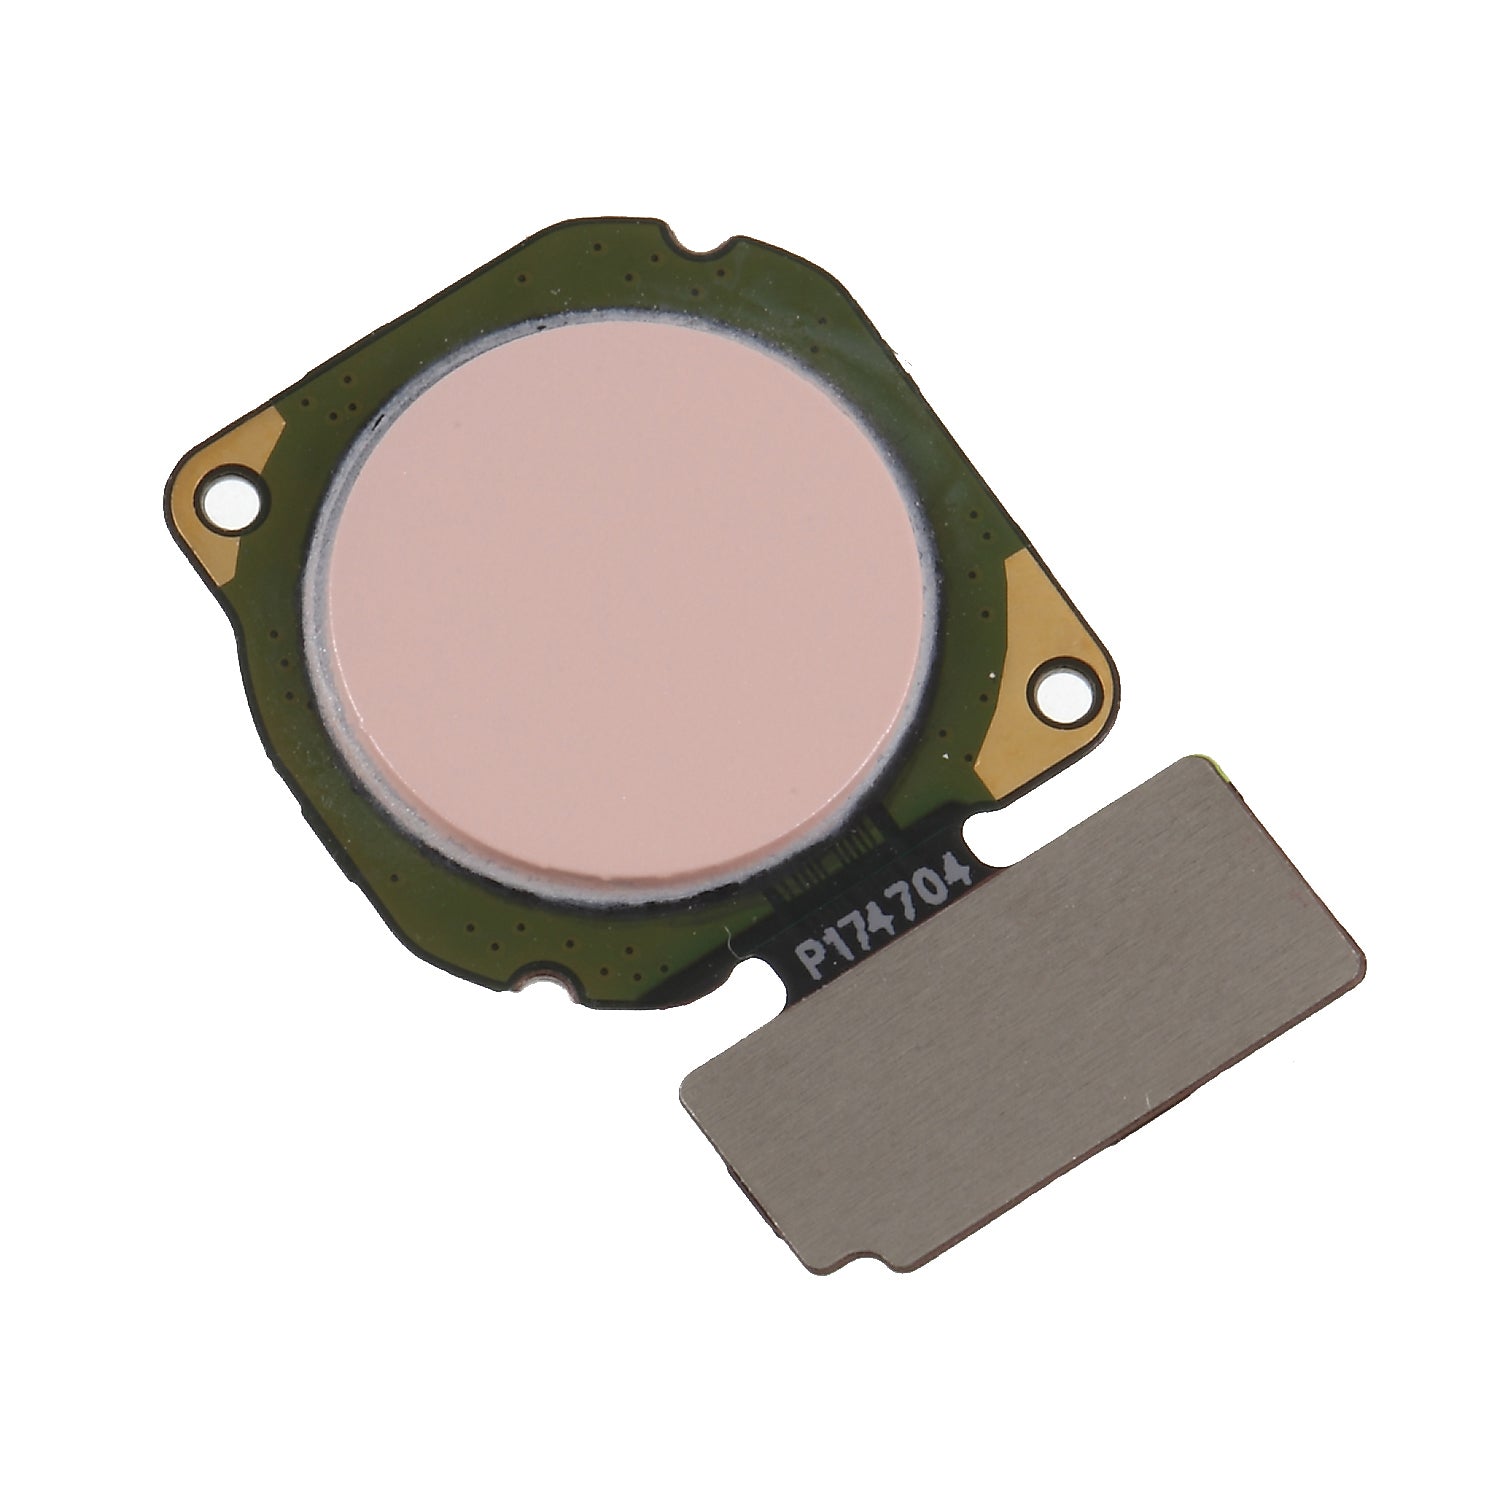 OEM Home Key Fingerprint Button Flex Cable Part for Huawei P20 Lite / Nova 3e (China) - Pink